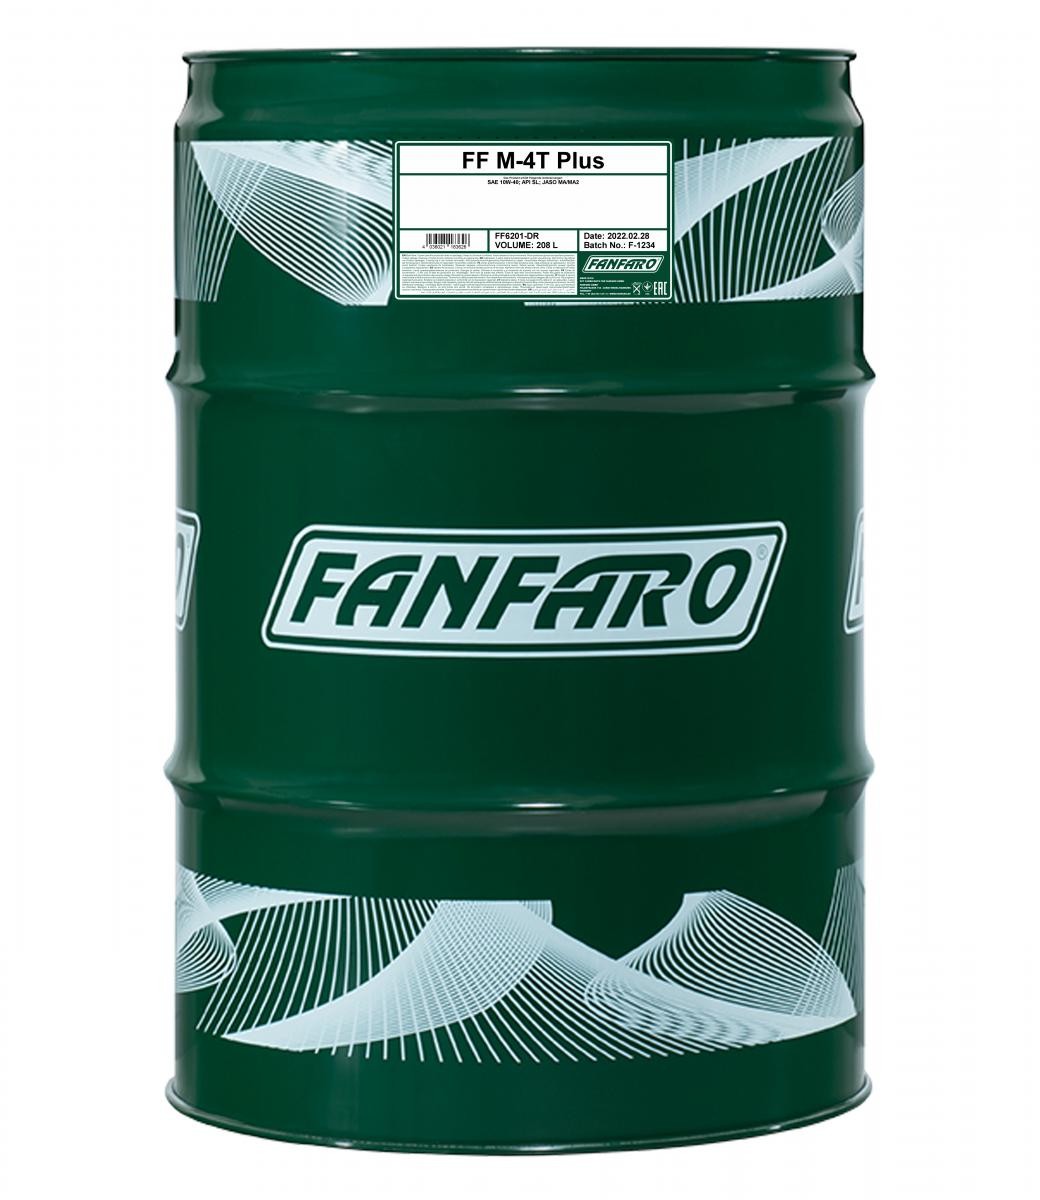 Motorrad FANFARO M-4T+ 10W-40, 208l, Teilsynthetiköl Motoröl FF6201-DR günstig kaufen